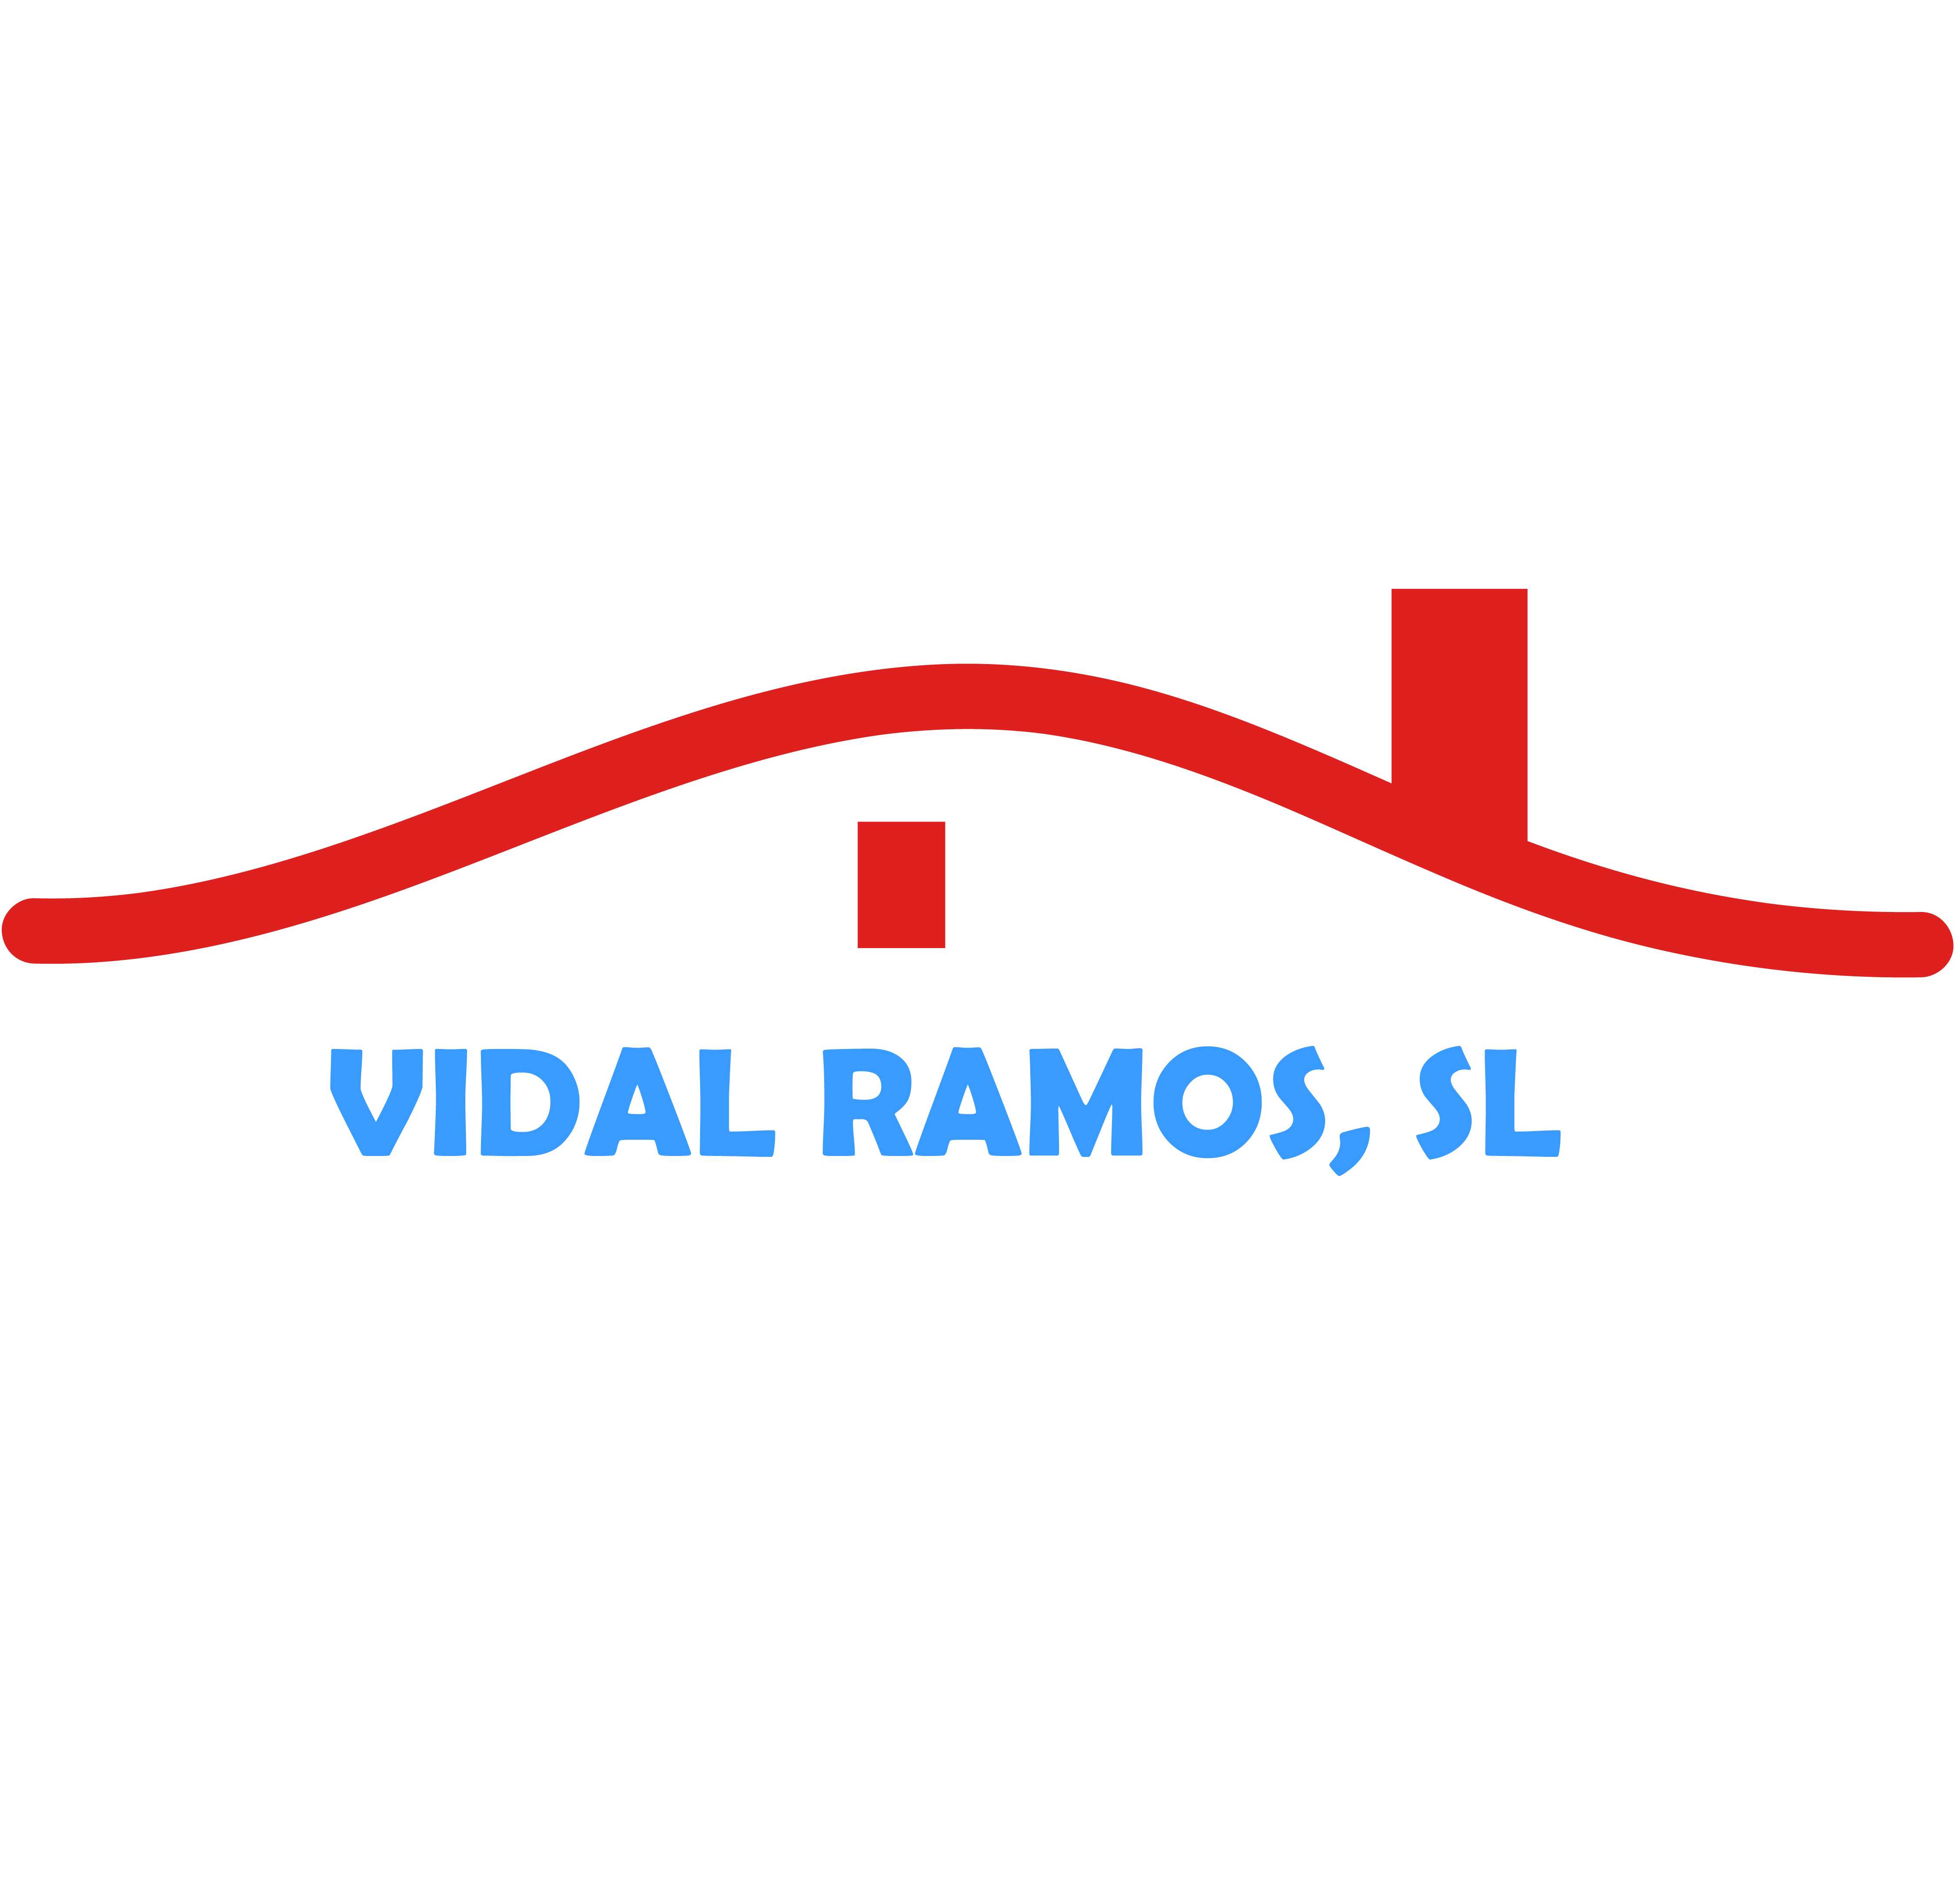 VIDAL RAMOS, S.L.